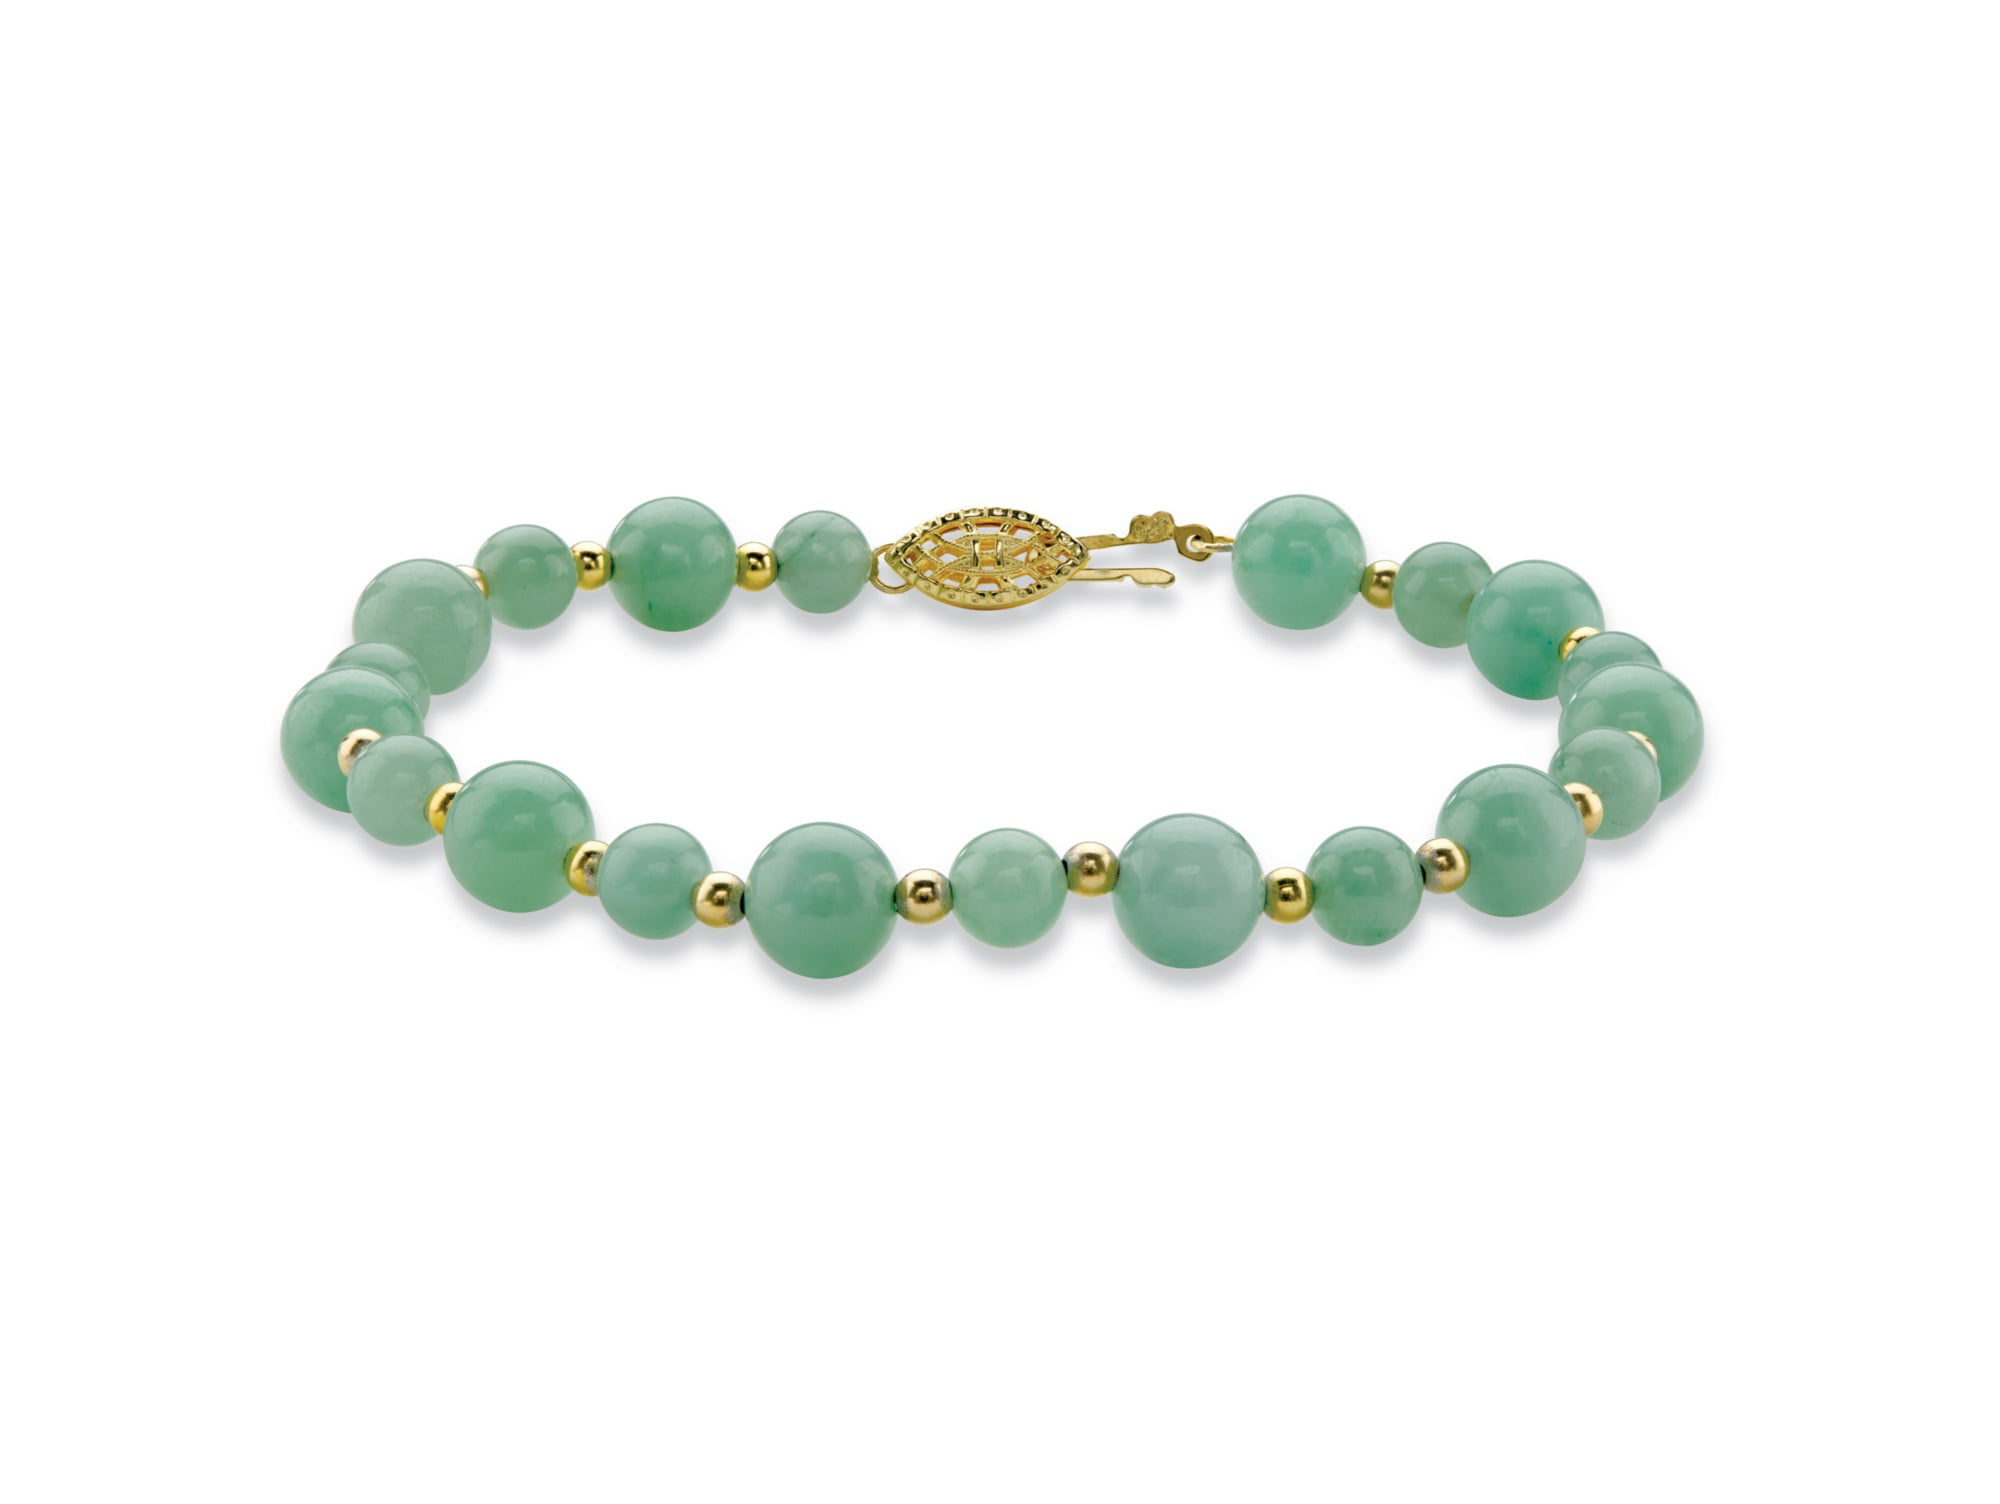 Fricgore Handmade Jewelry Green Chinese Jade Jadeite Bead Beads Bangle Bracelet Size 8mm